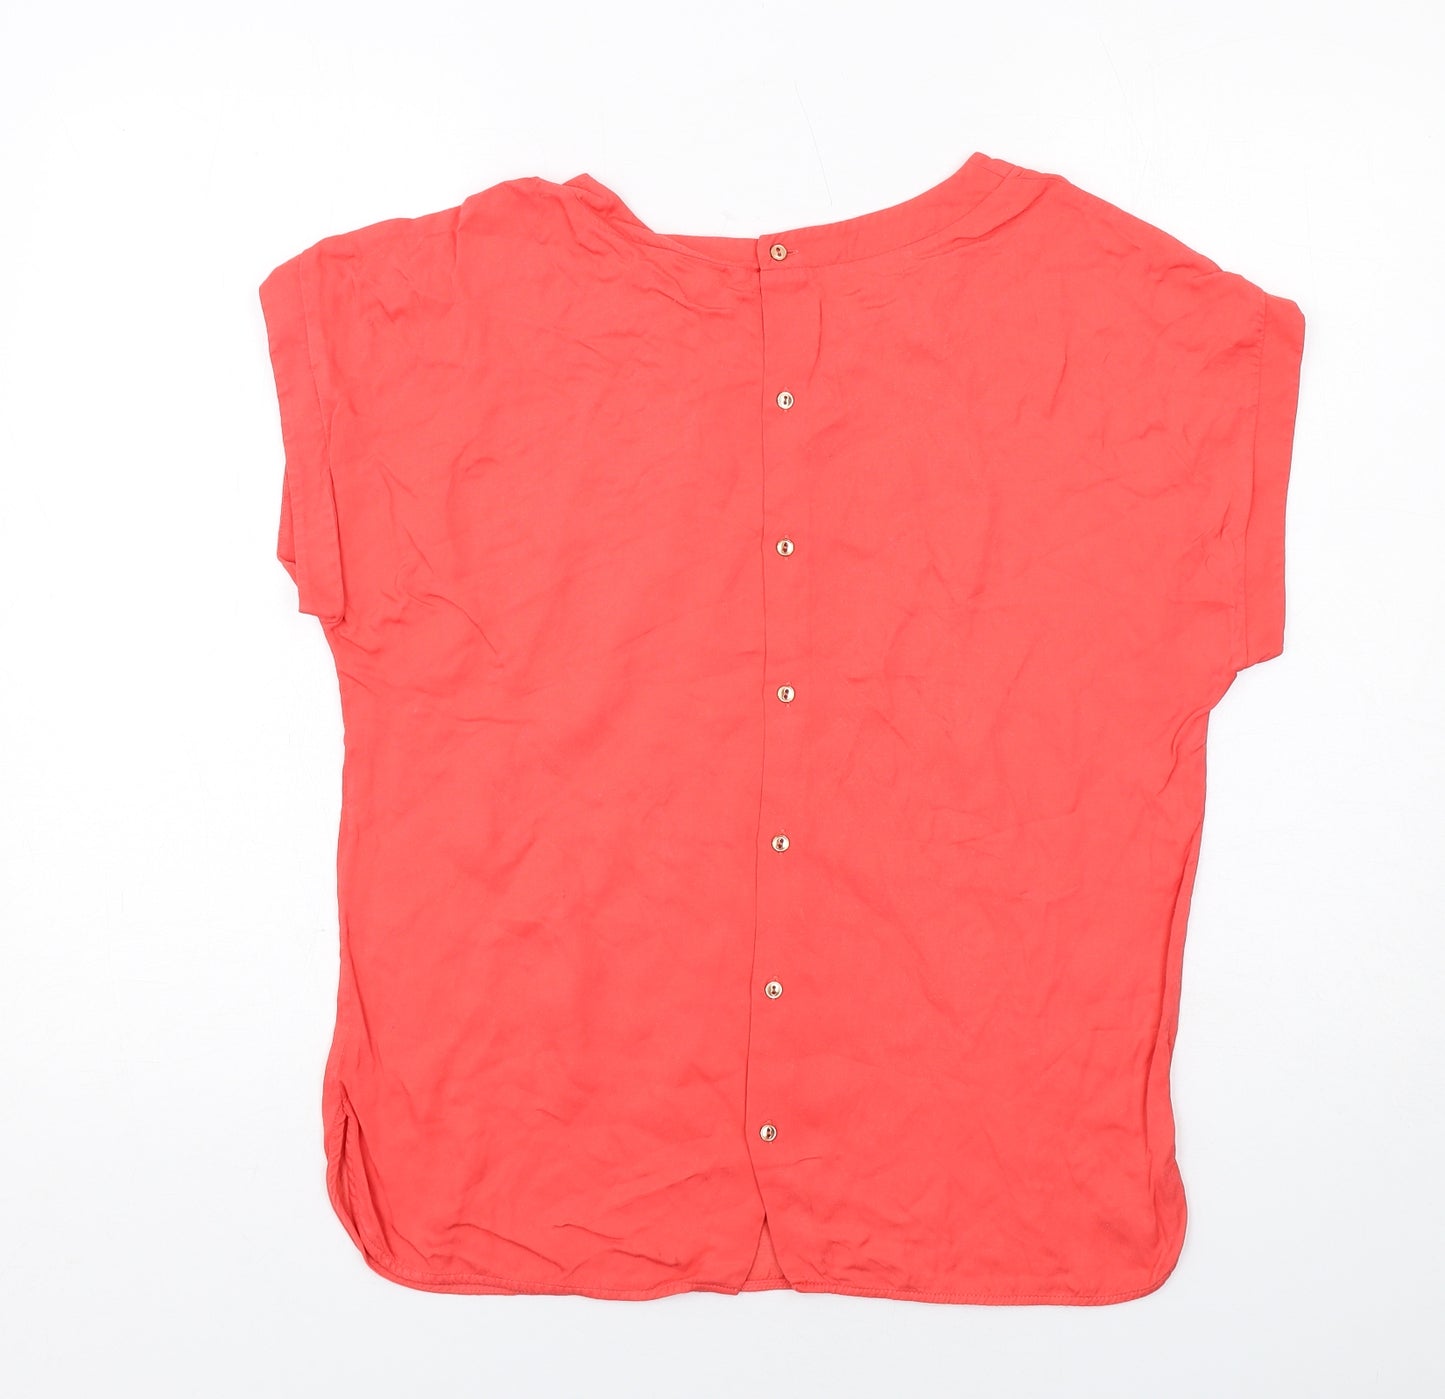 Reiss Womens Red Viscose Basic T-Shirt Size 12 Round Neck